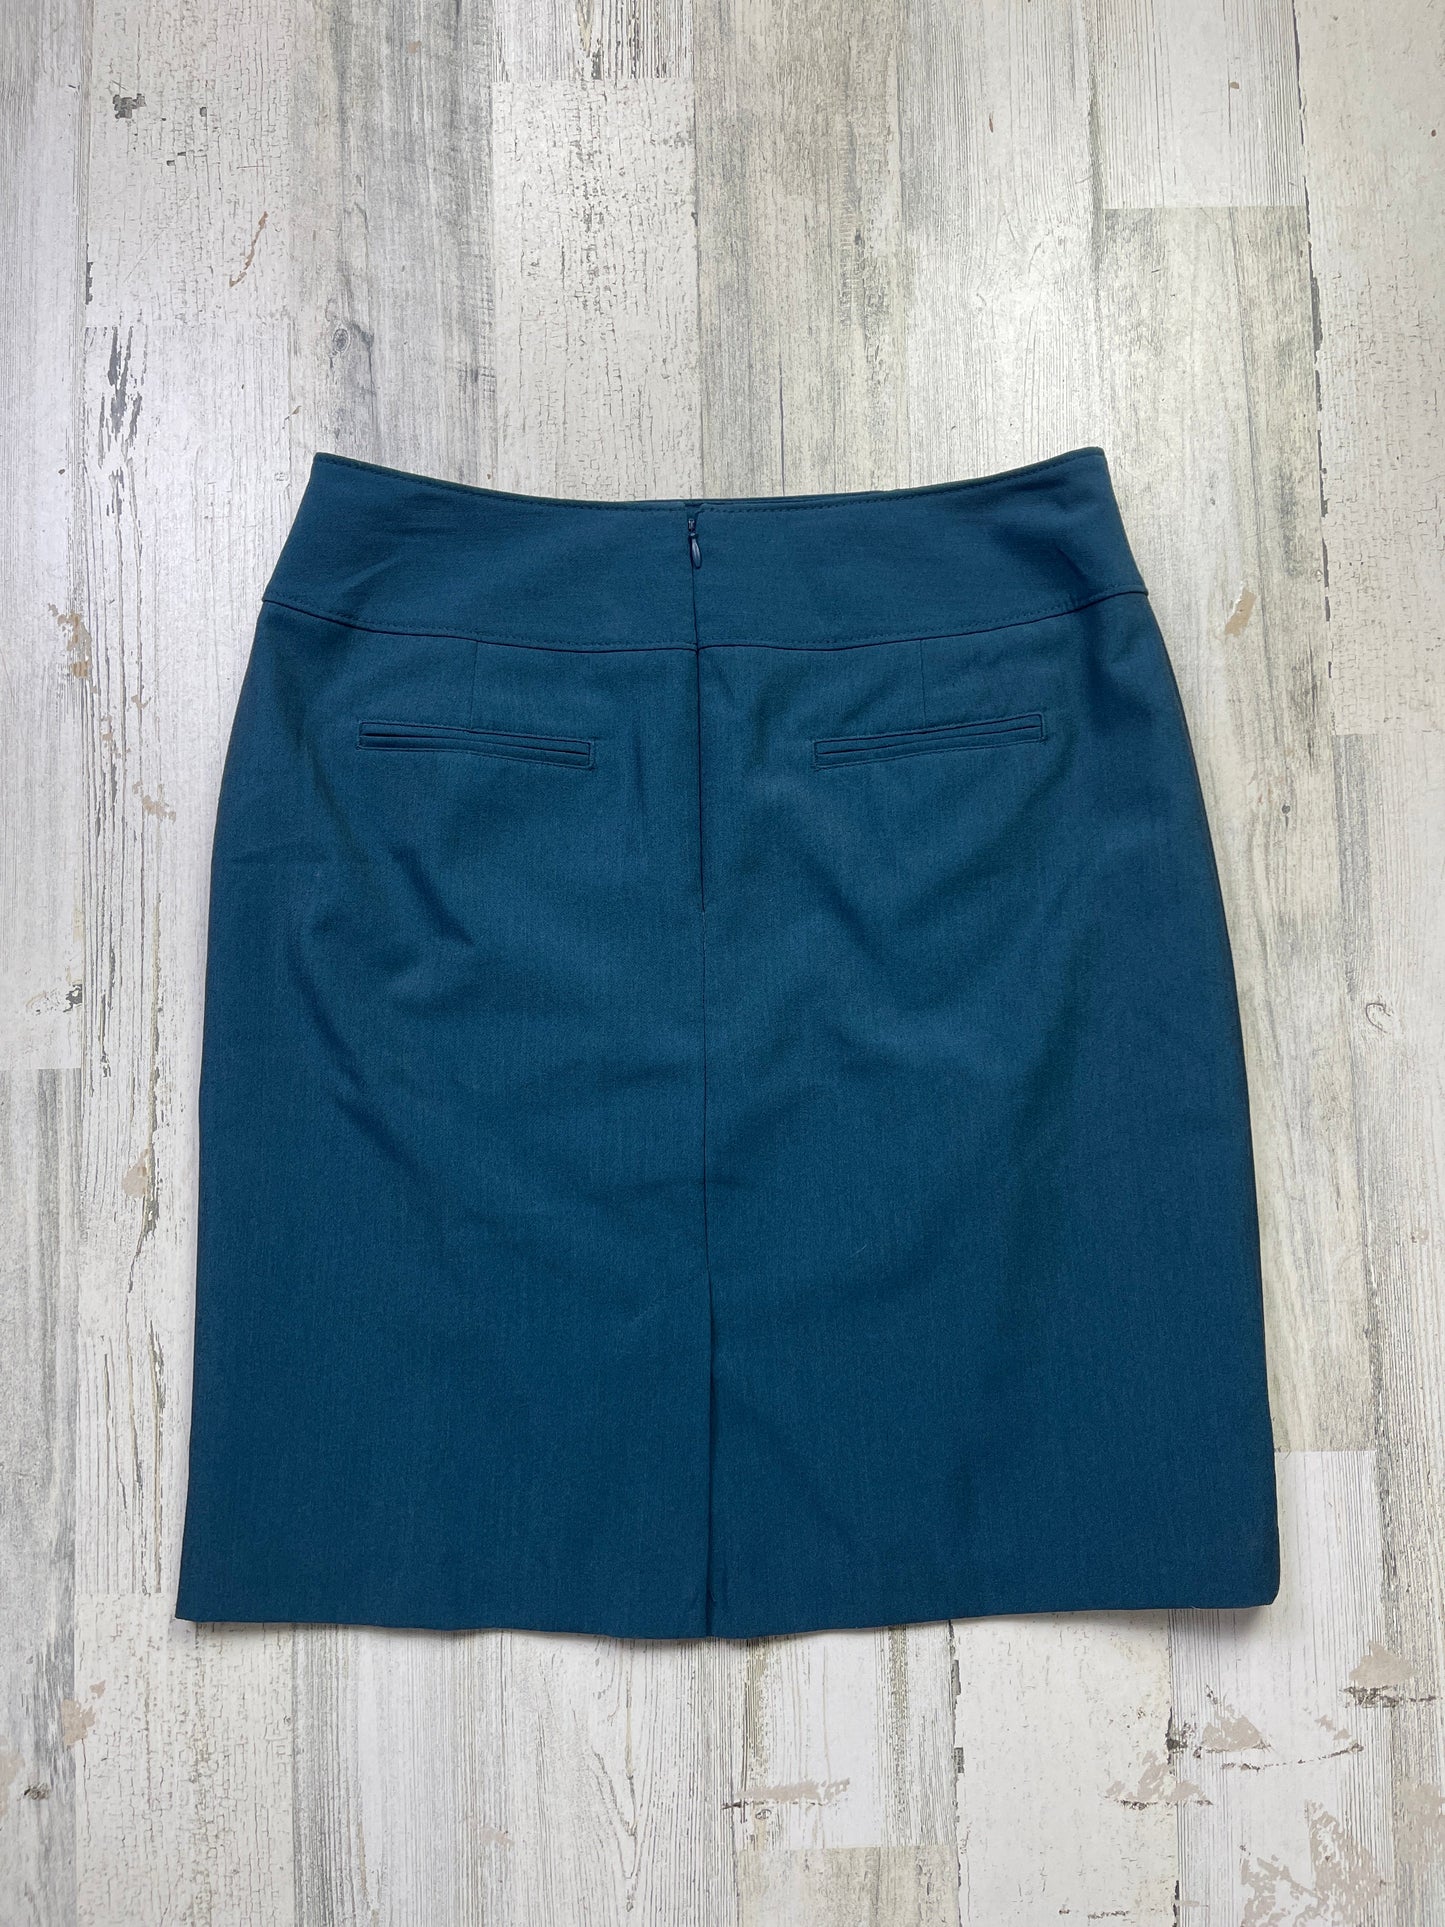 Teal Skirt Mini & Short Worthington, Size 12